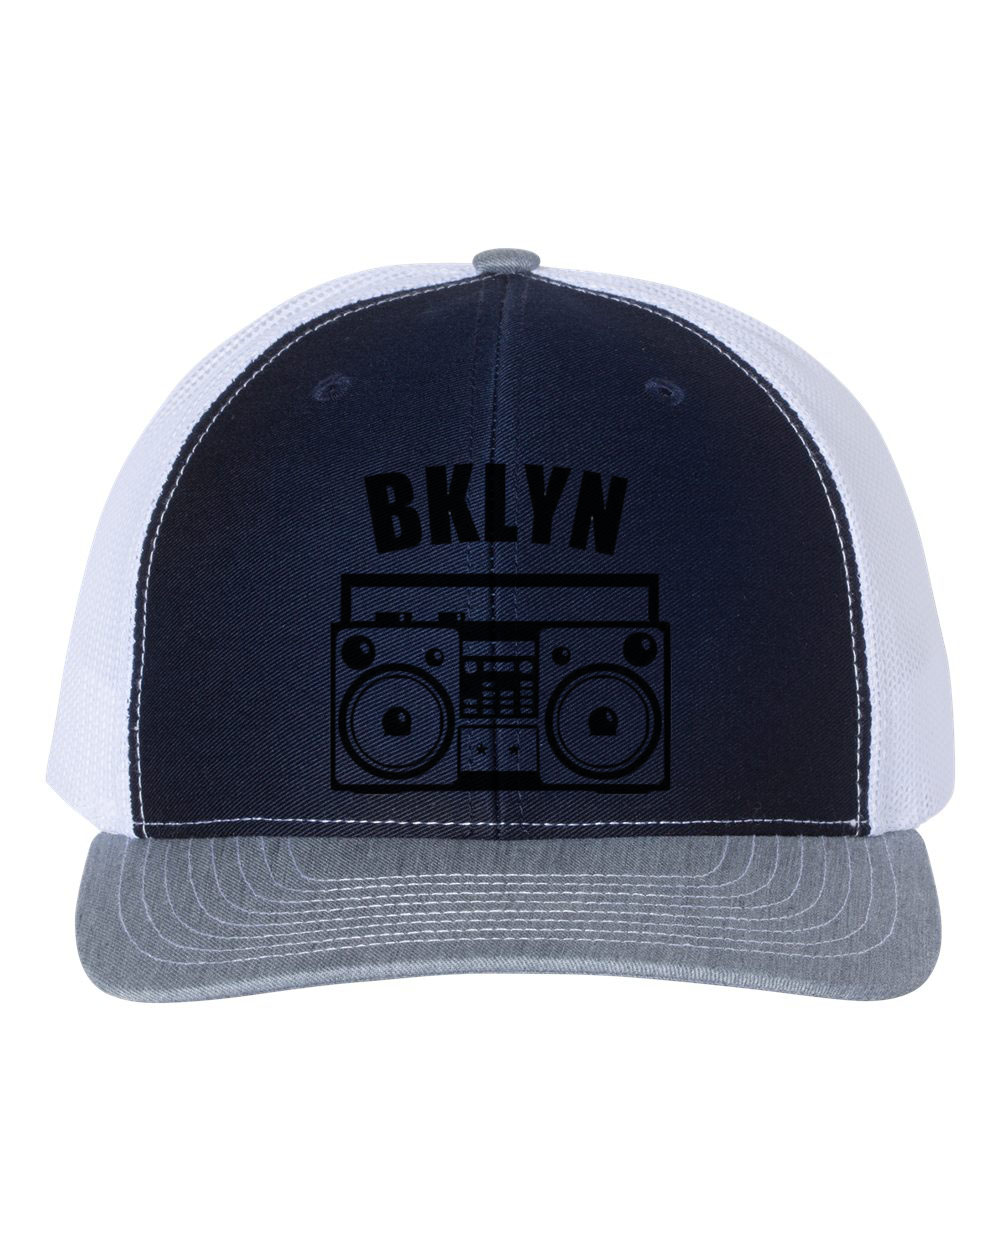 Brooklyn Hat, BKLYN, Boombox Hat, Retro Hat, Trucker Hat, Brooklyn Snapback, New York Hat, Adjustable Cap, Bklyn Hat, 90's Hat, Black Text, Navy/White/Heather - image 1 of 1